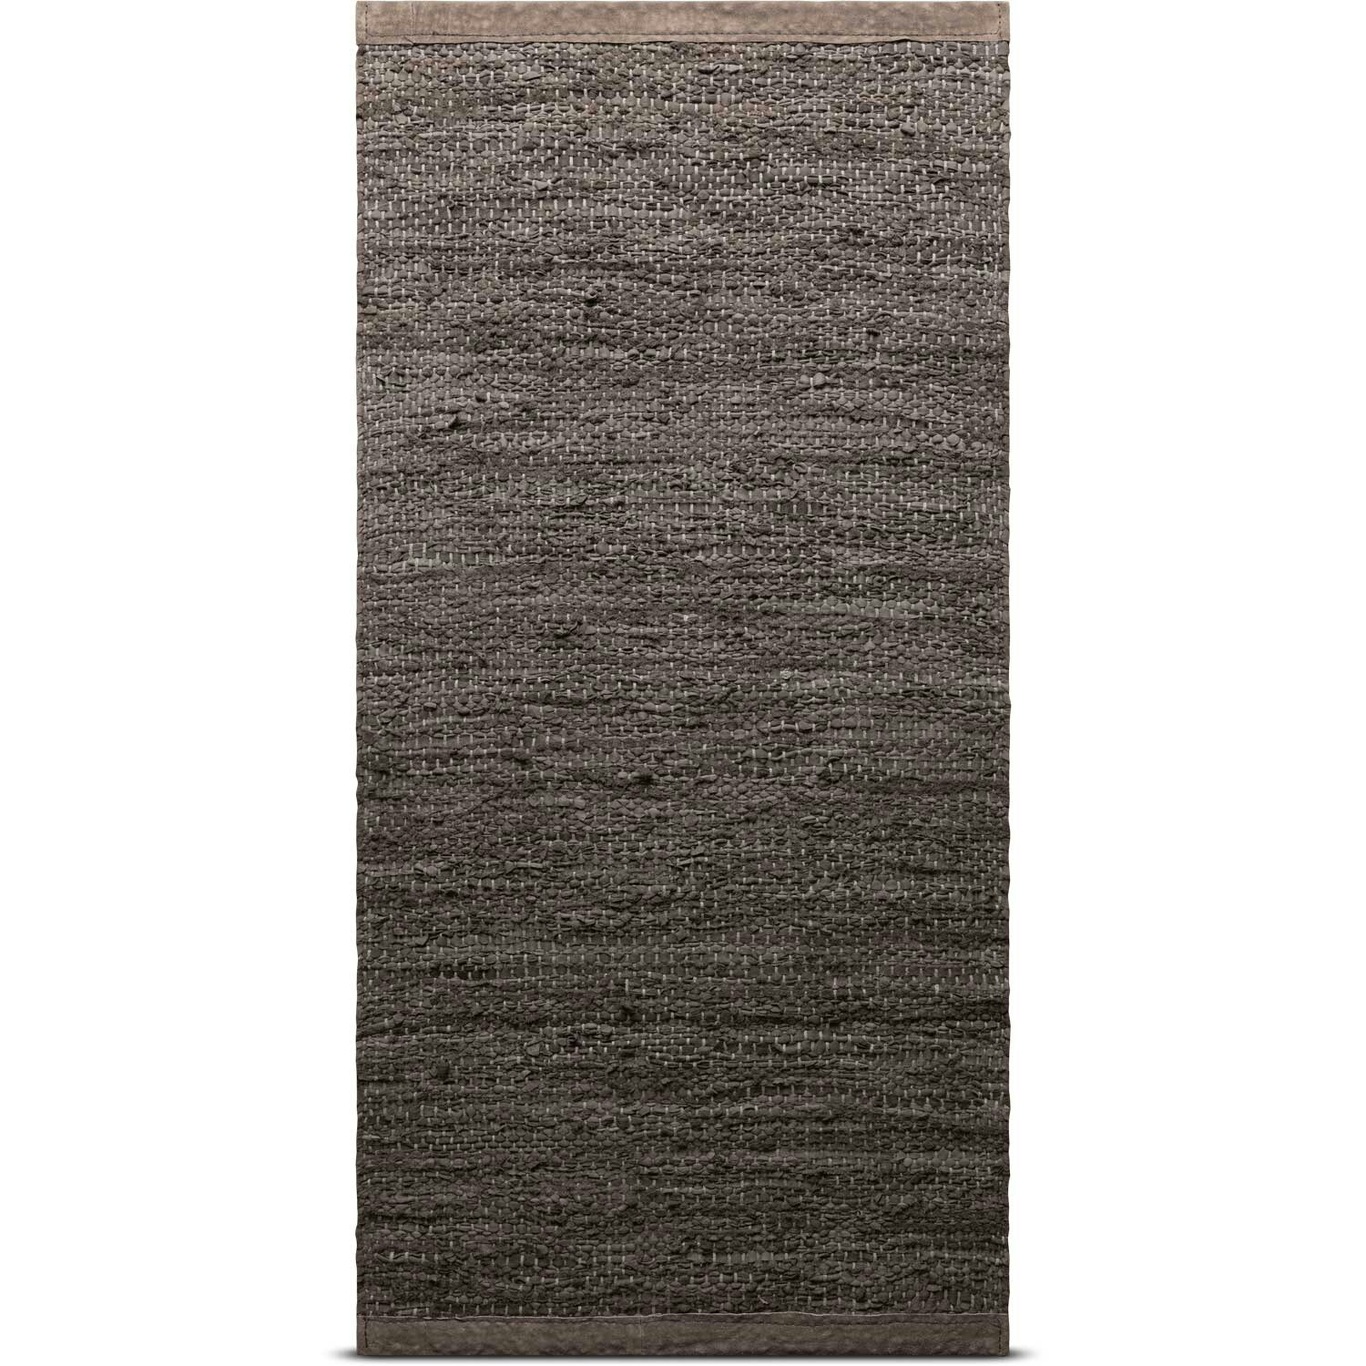 Leather rug 75x300cm, Wood